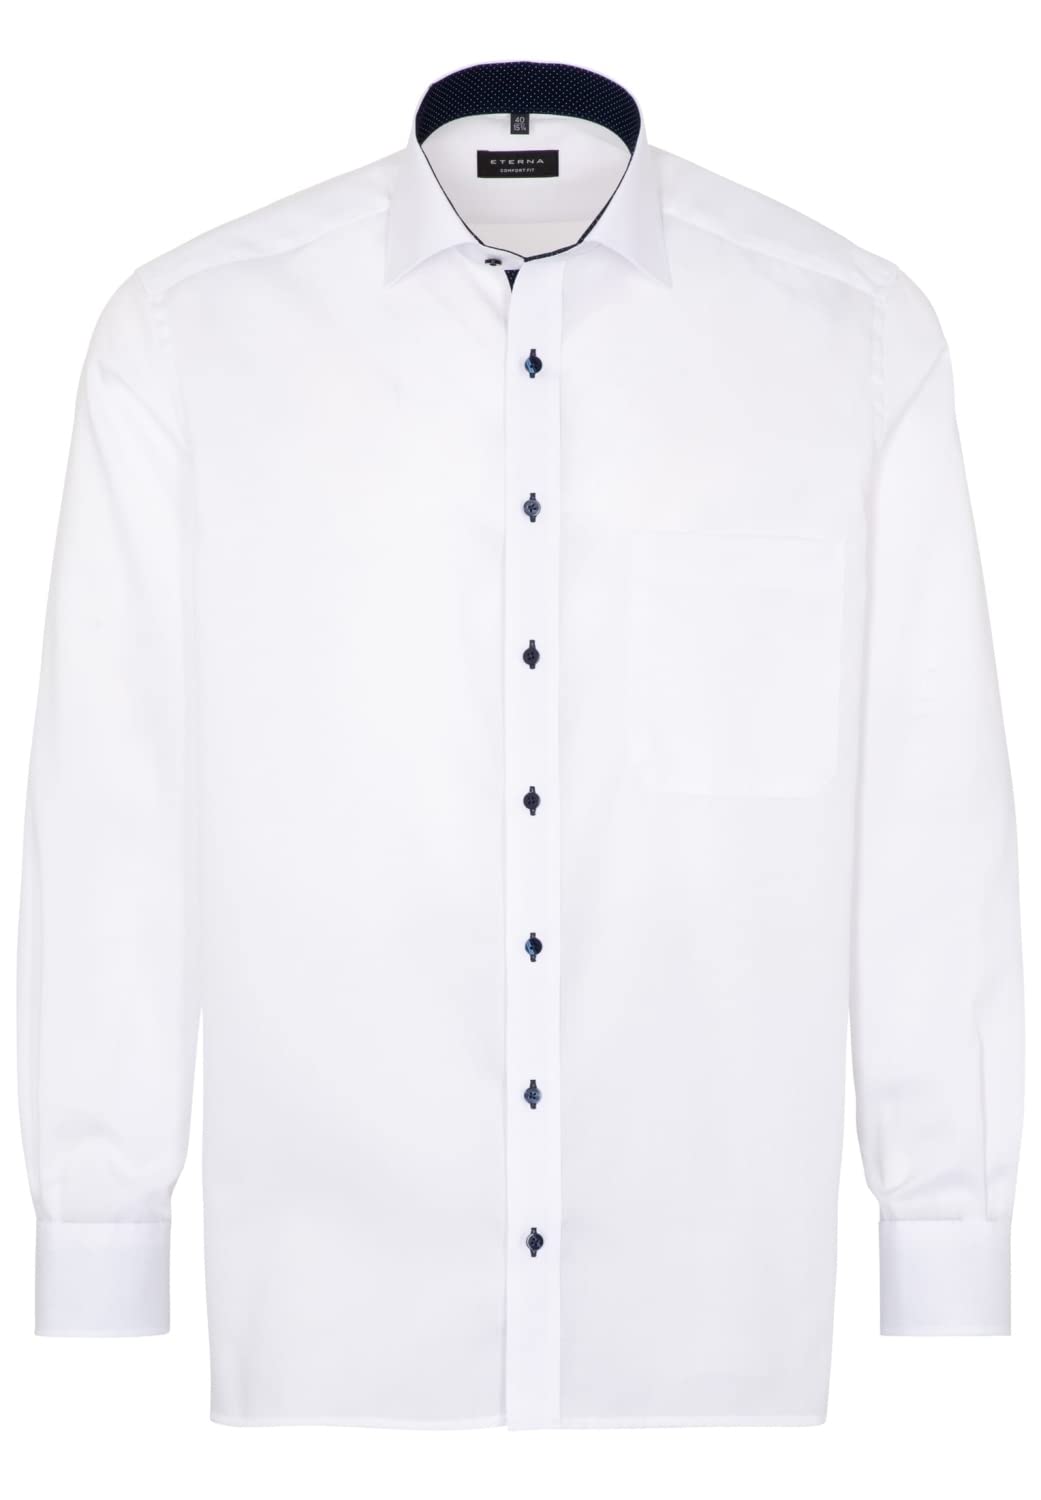 ETERNA Langarm Hemd COMFORT FIT Pinpoint unifarben mit Classic Kent Kragen- Gr. 45 EU, Weiß